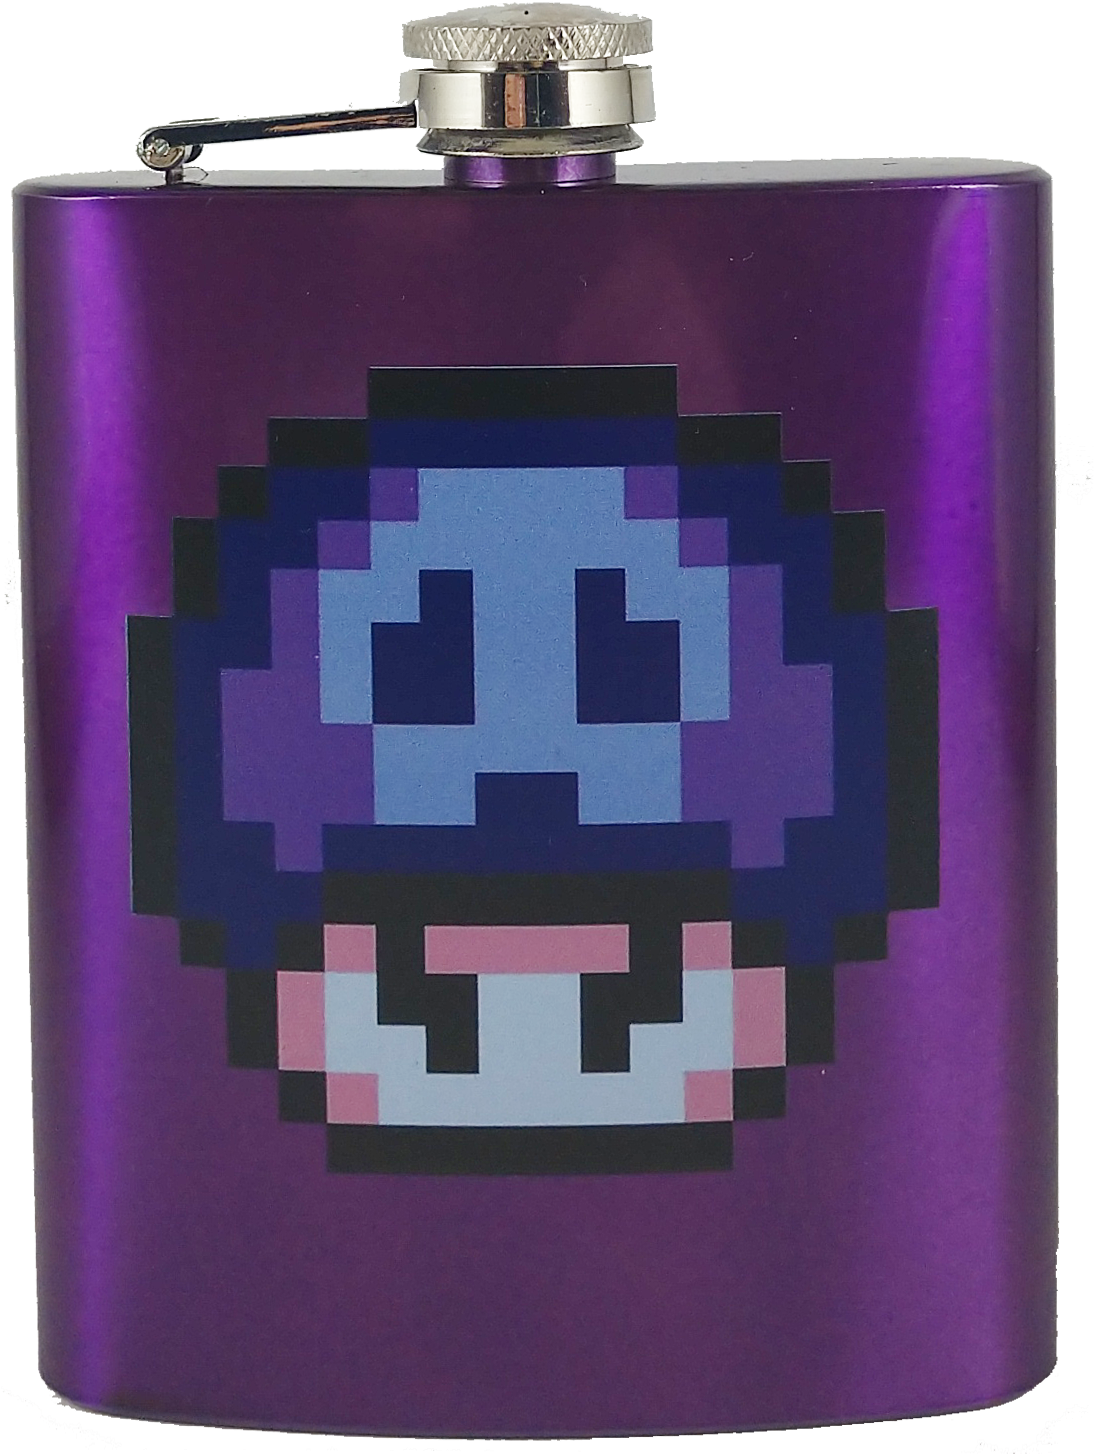 A Purple Flask With A Cartoon Mushroom On It